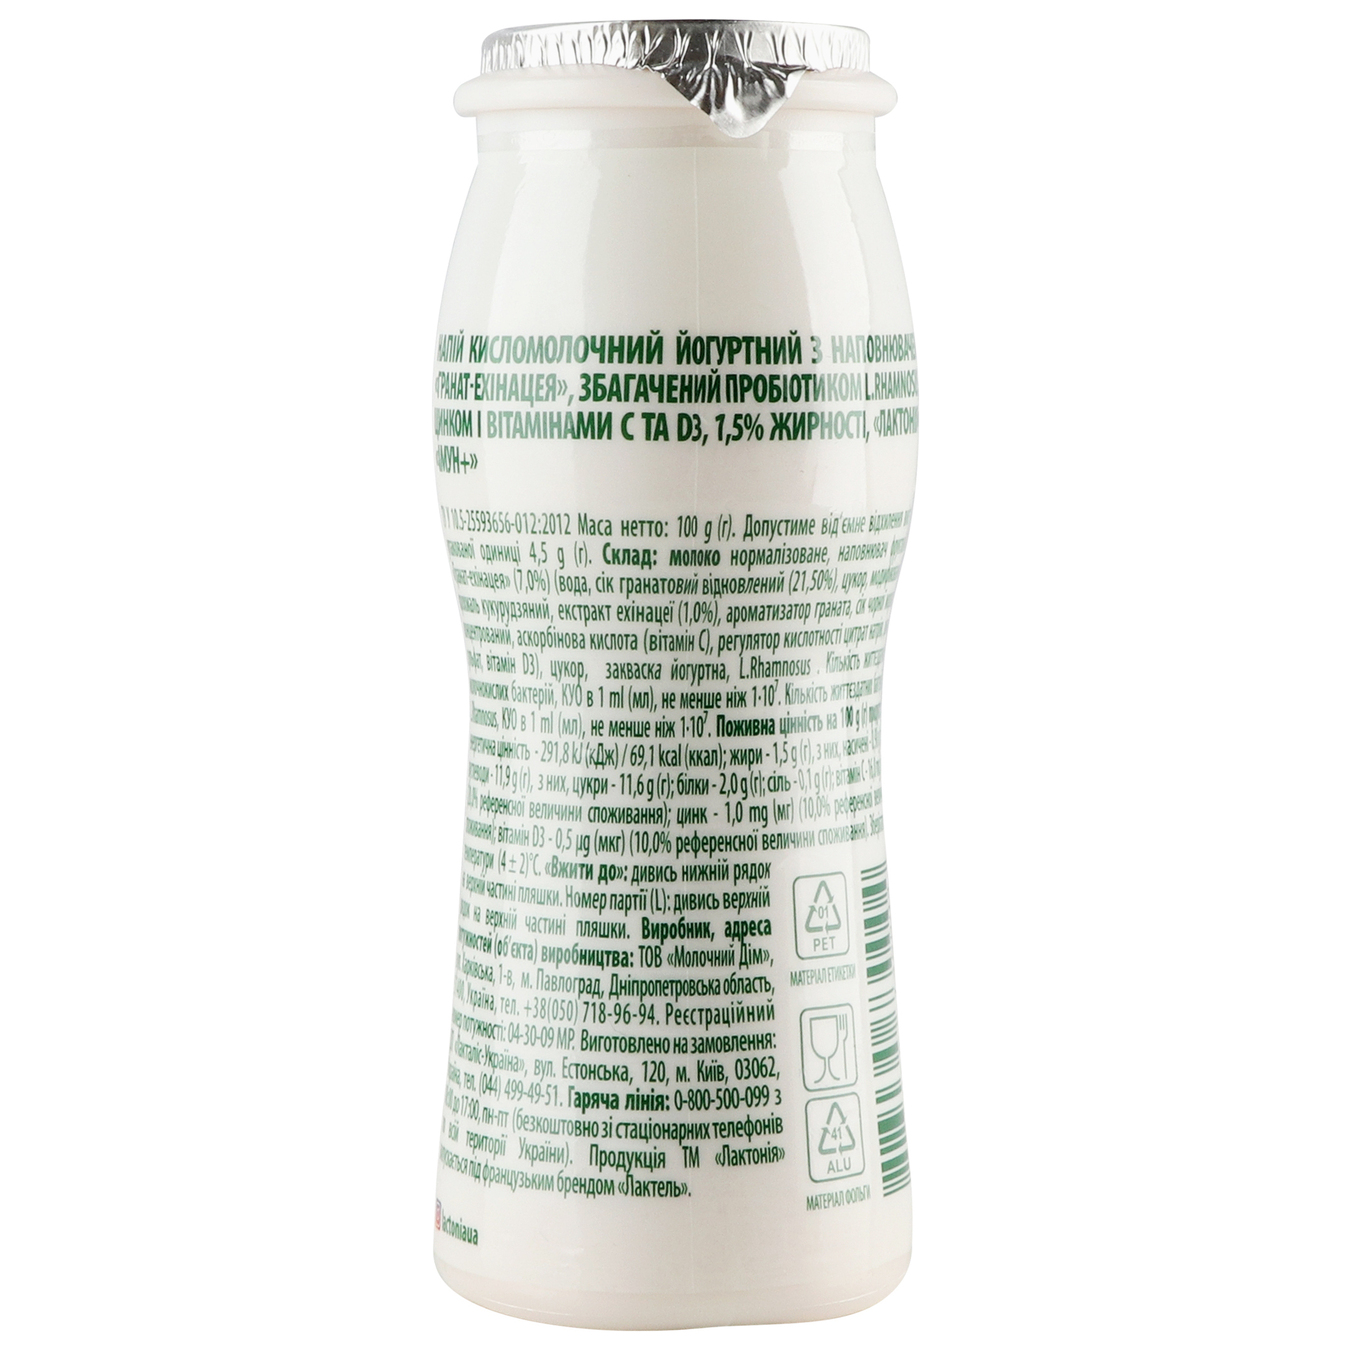 Drink Lactonia sour milk yogurt Imun + pomegranate-echinacea 1.5% 100g bottle 2